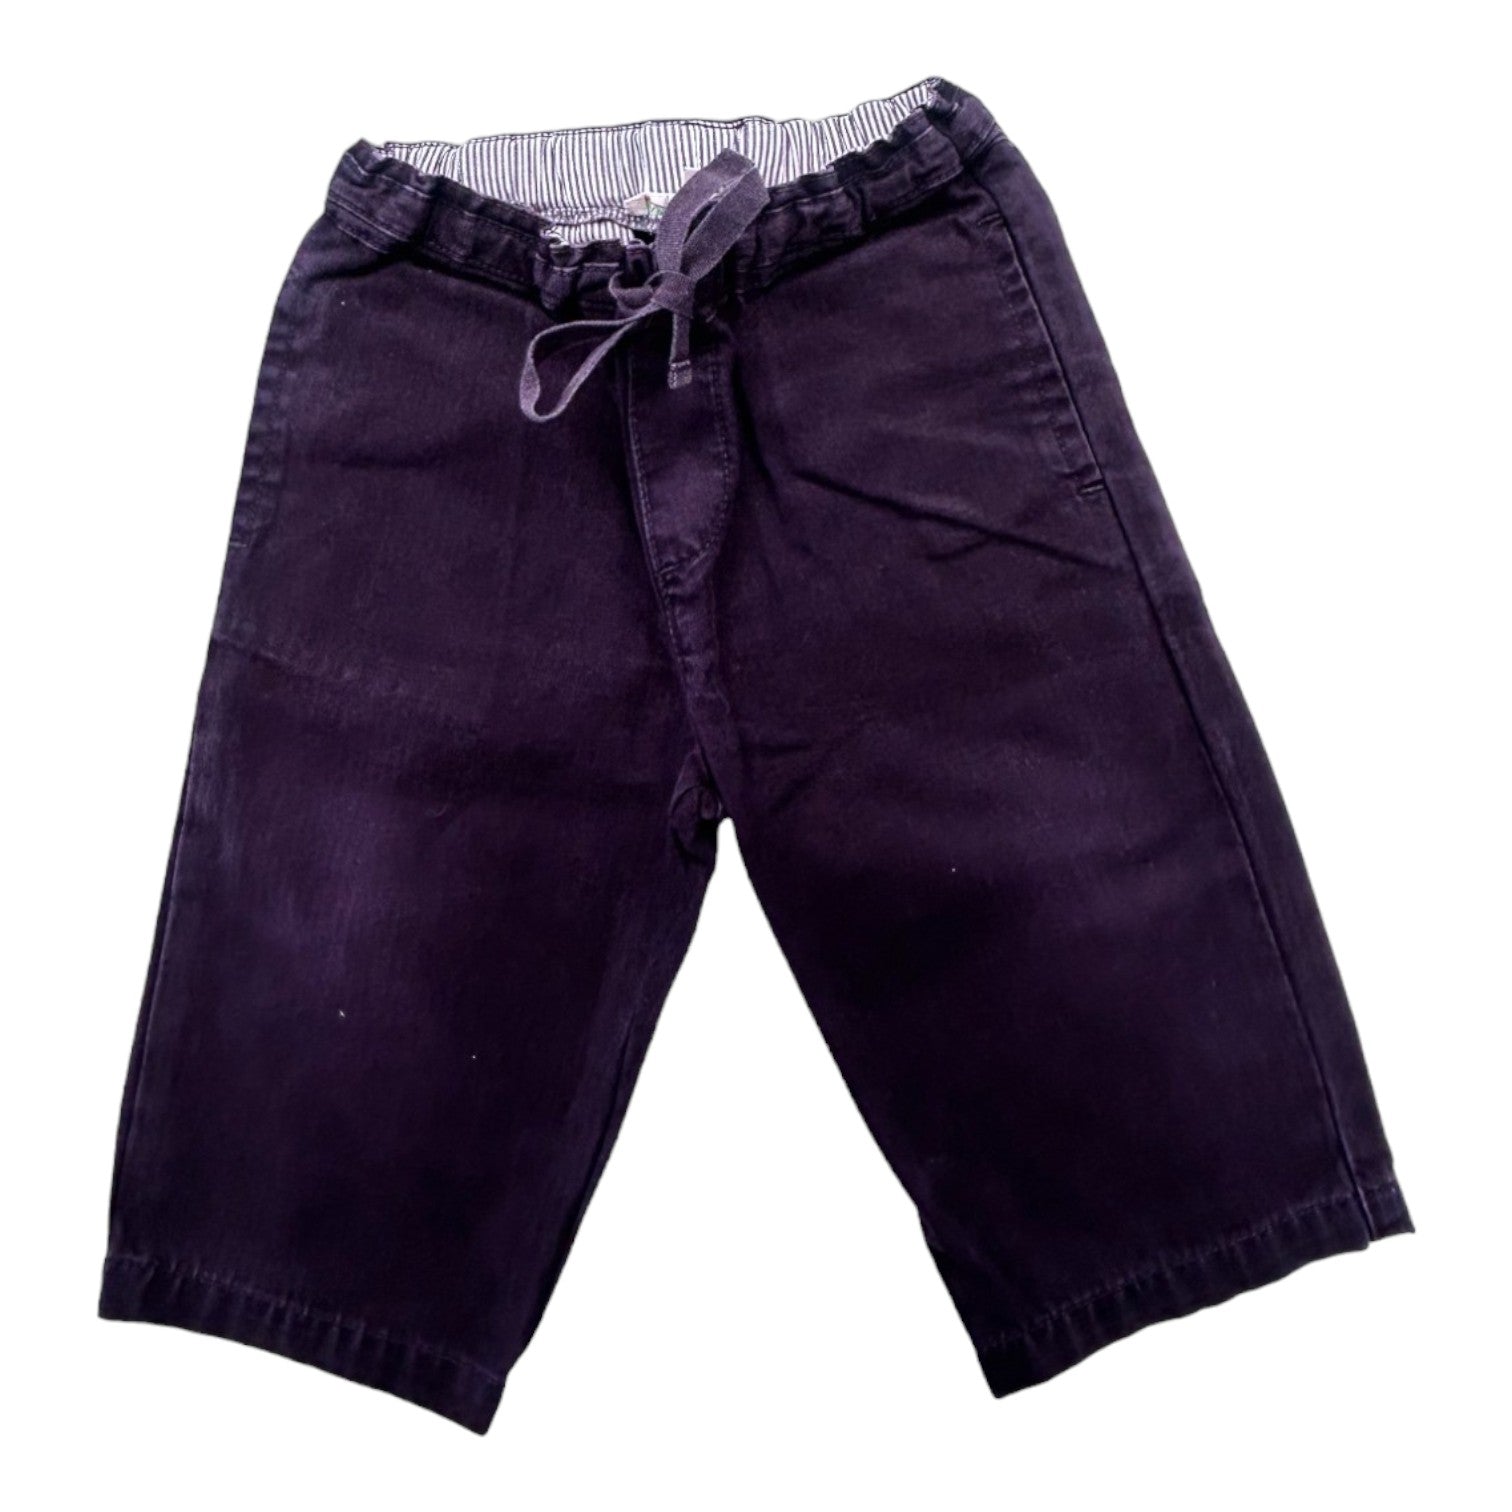 BONPOINT - Pantalon violet - 12 mois